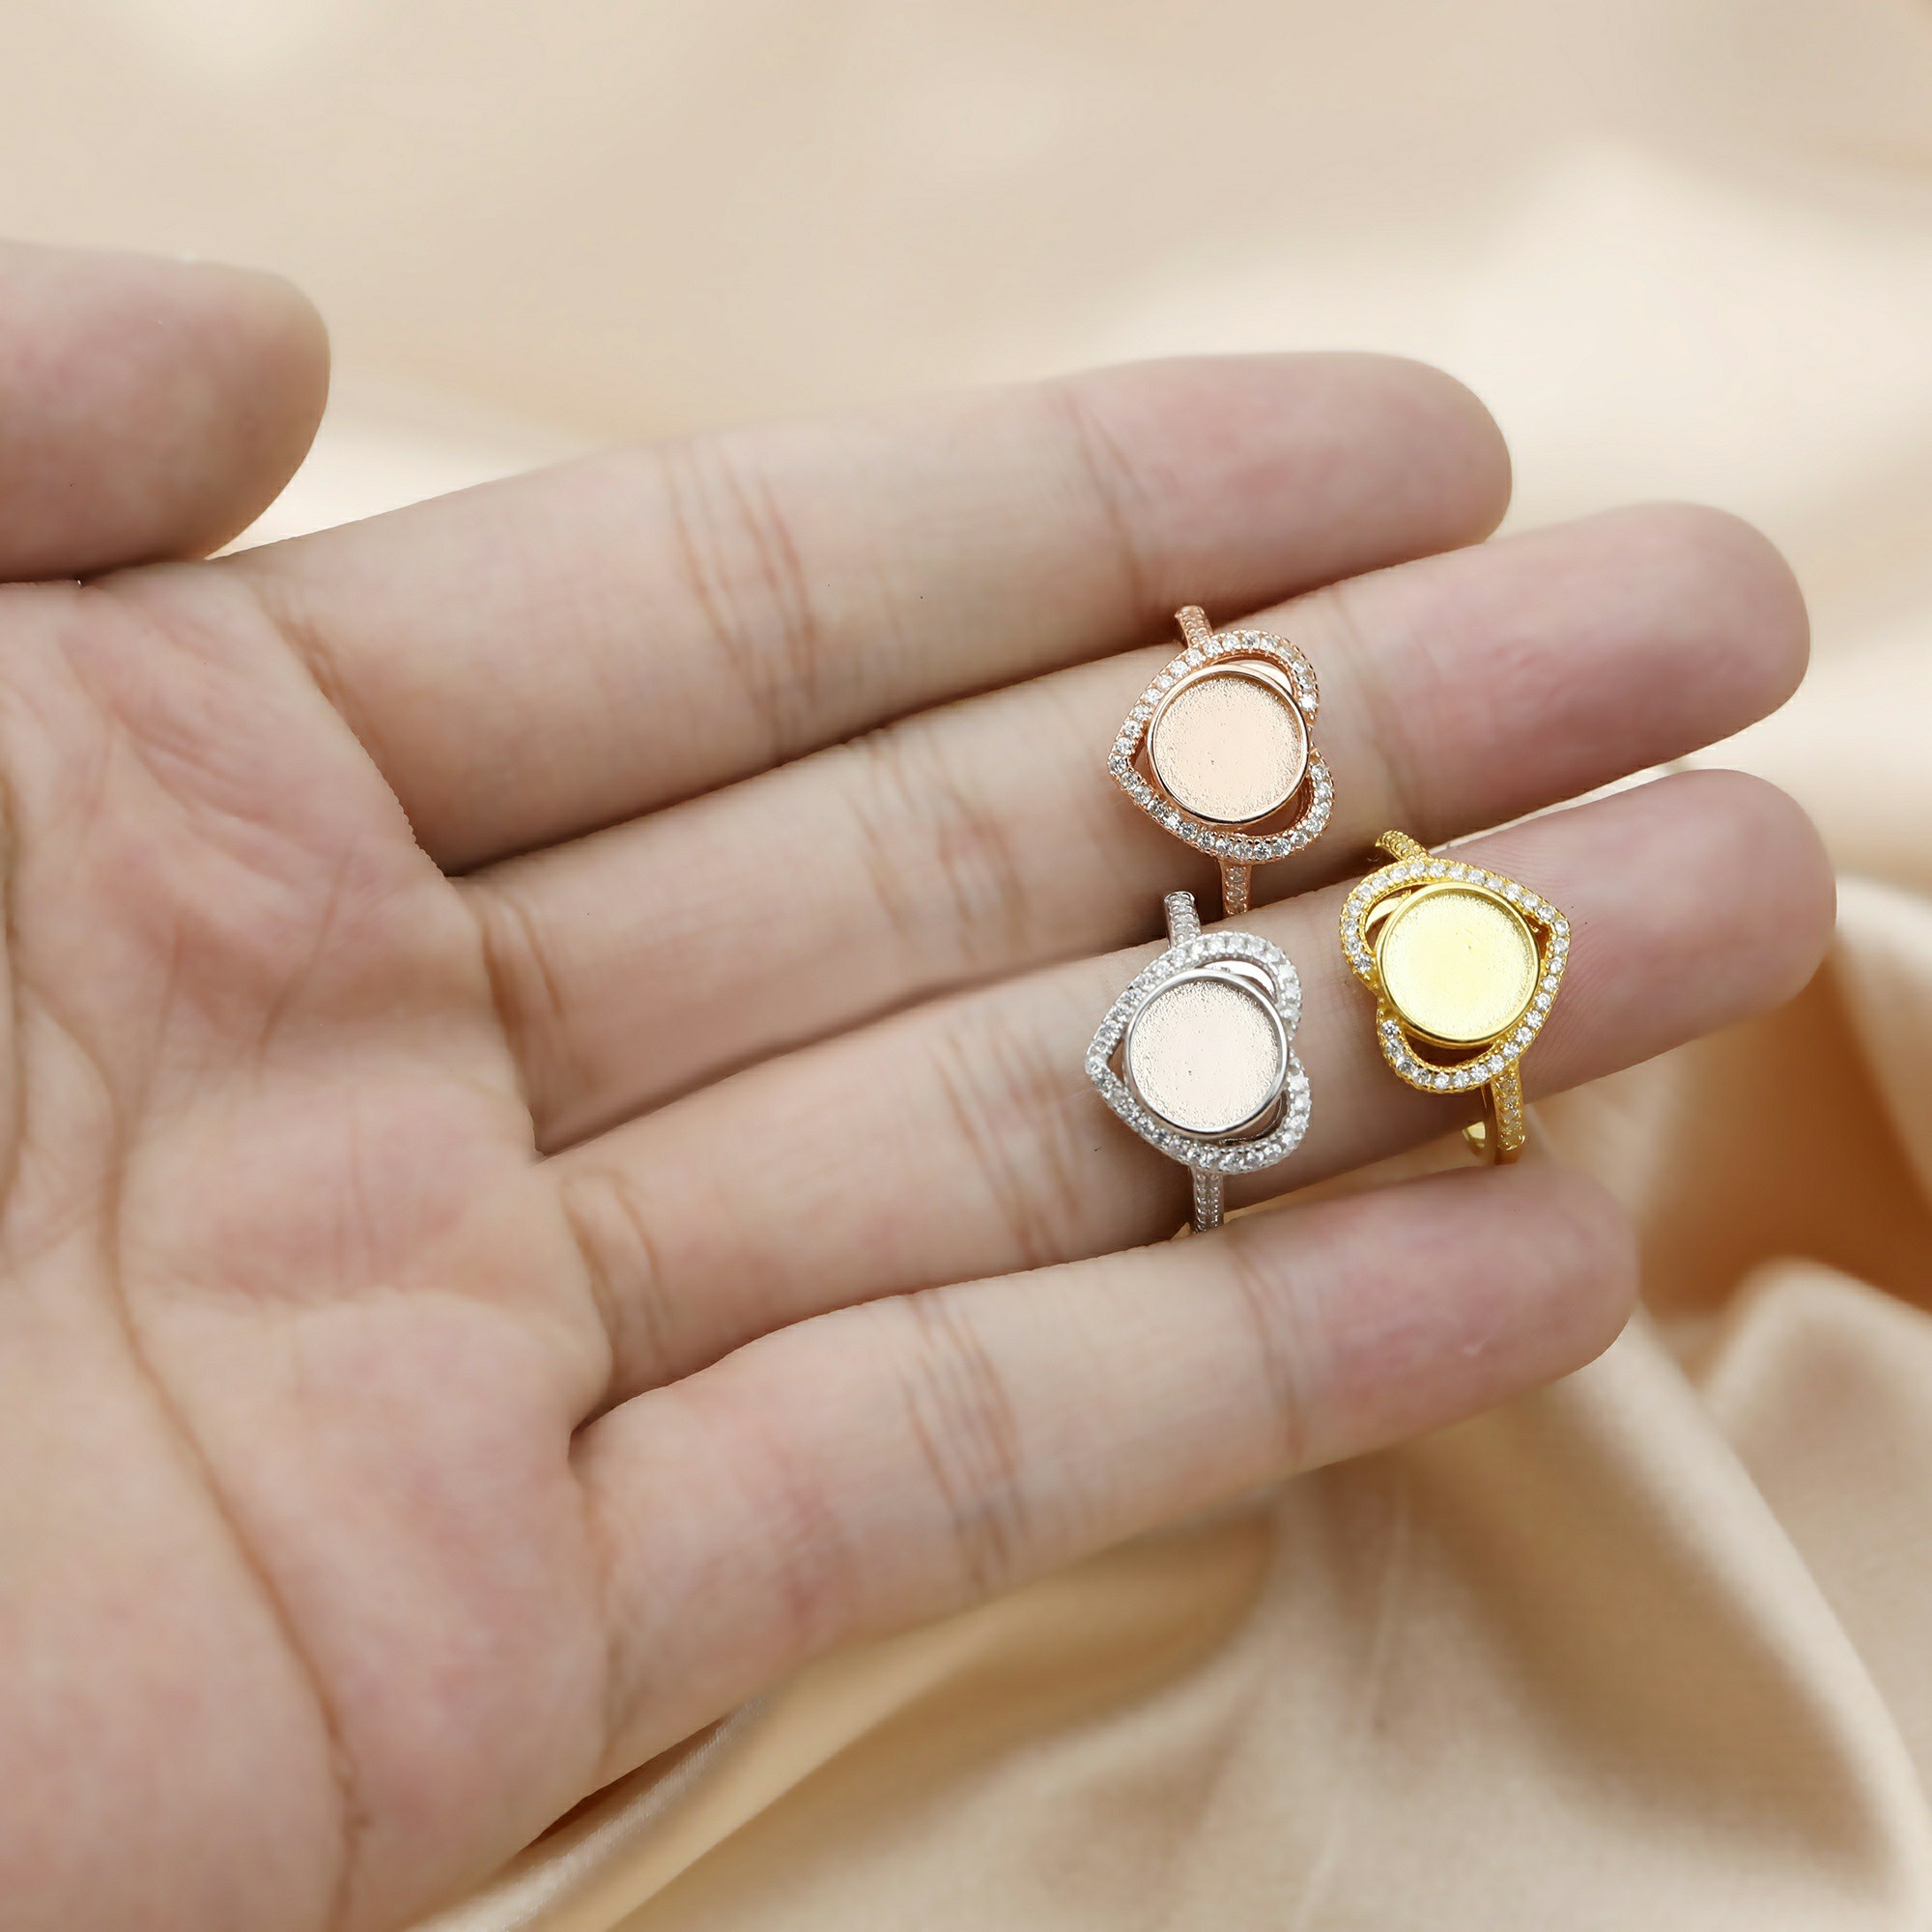 Wholesale Gold Filled Ring Settings ⋆ Keepsaker Supplies